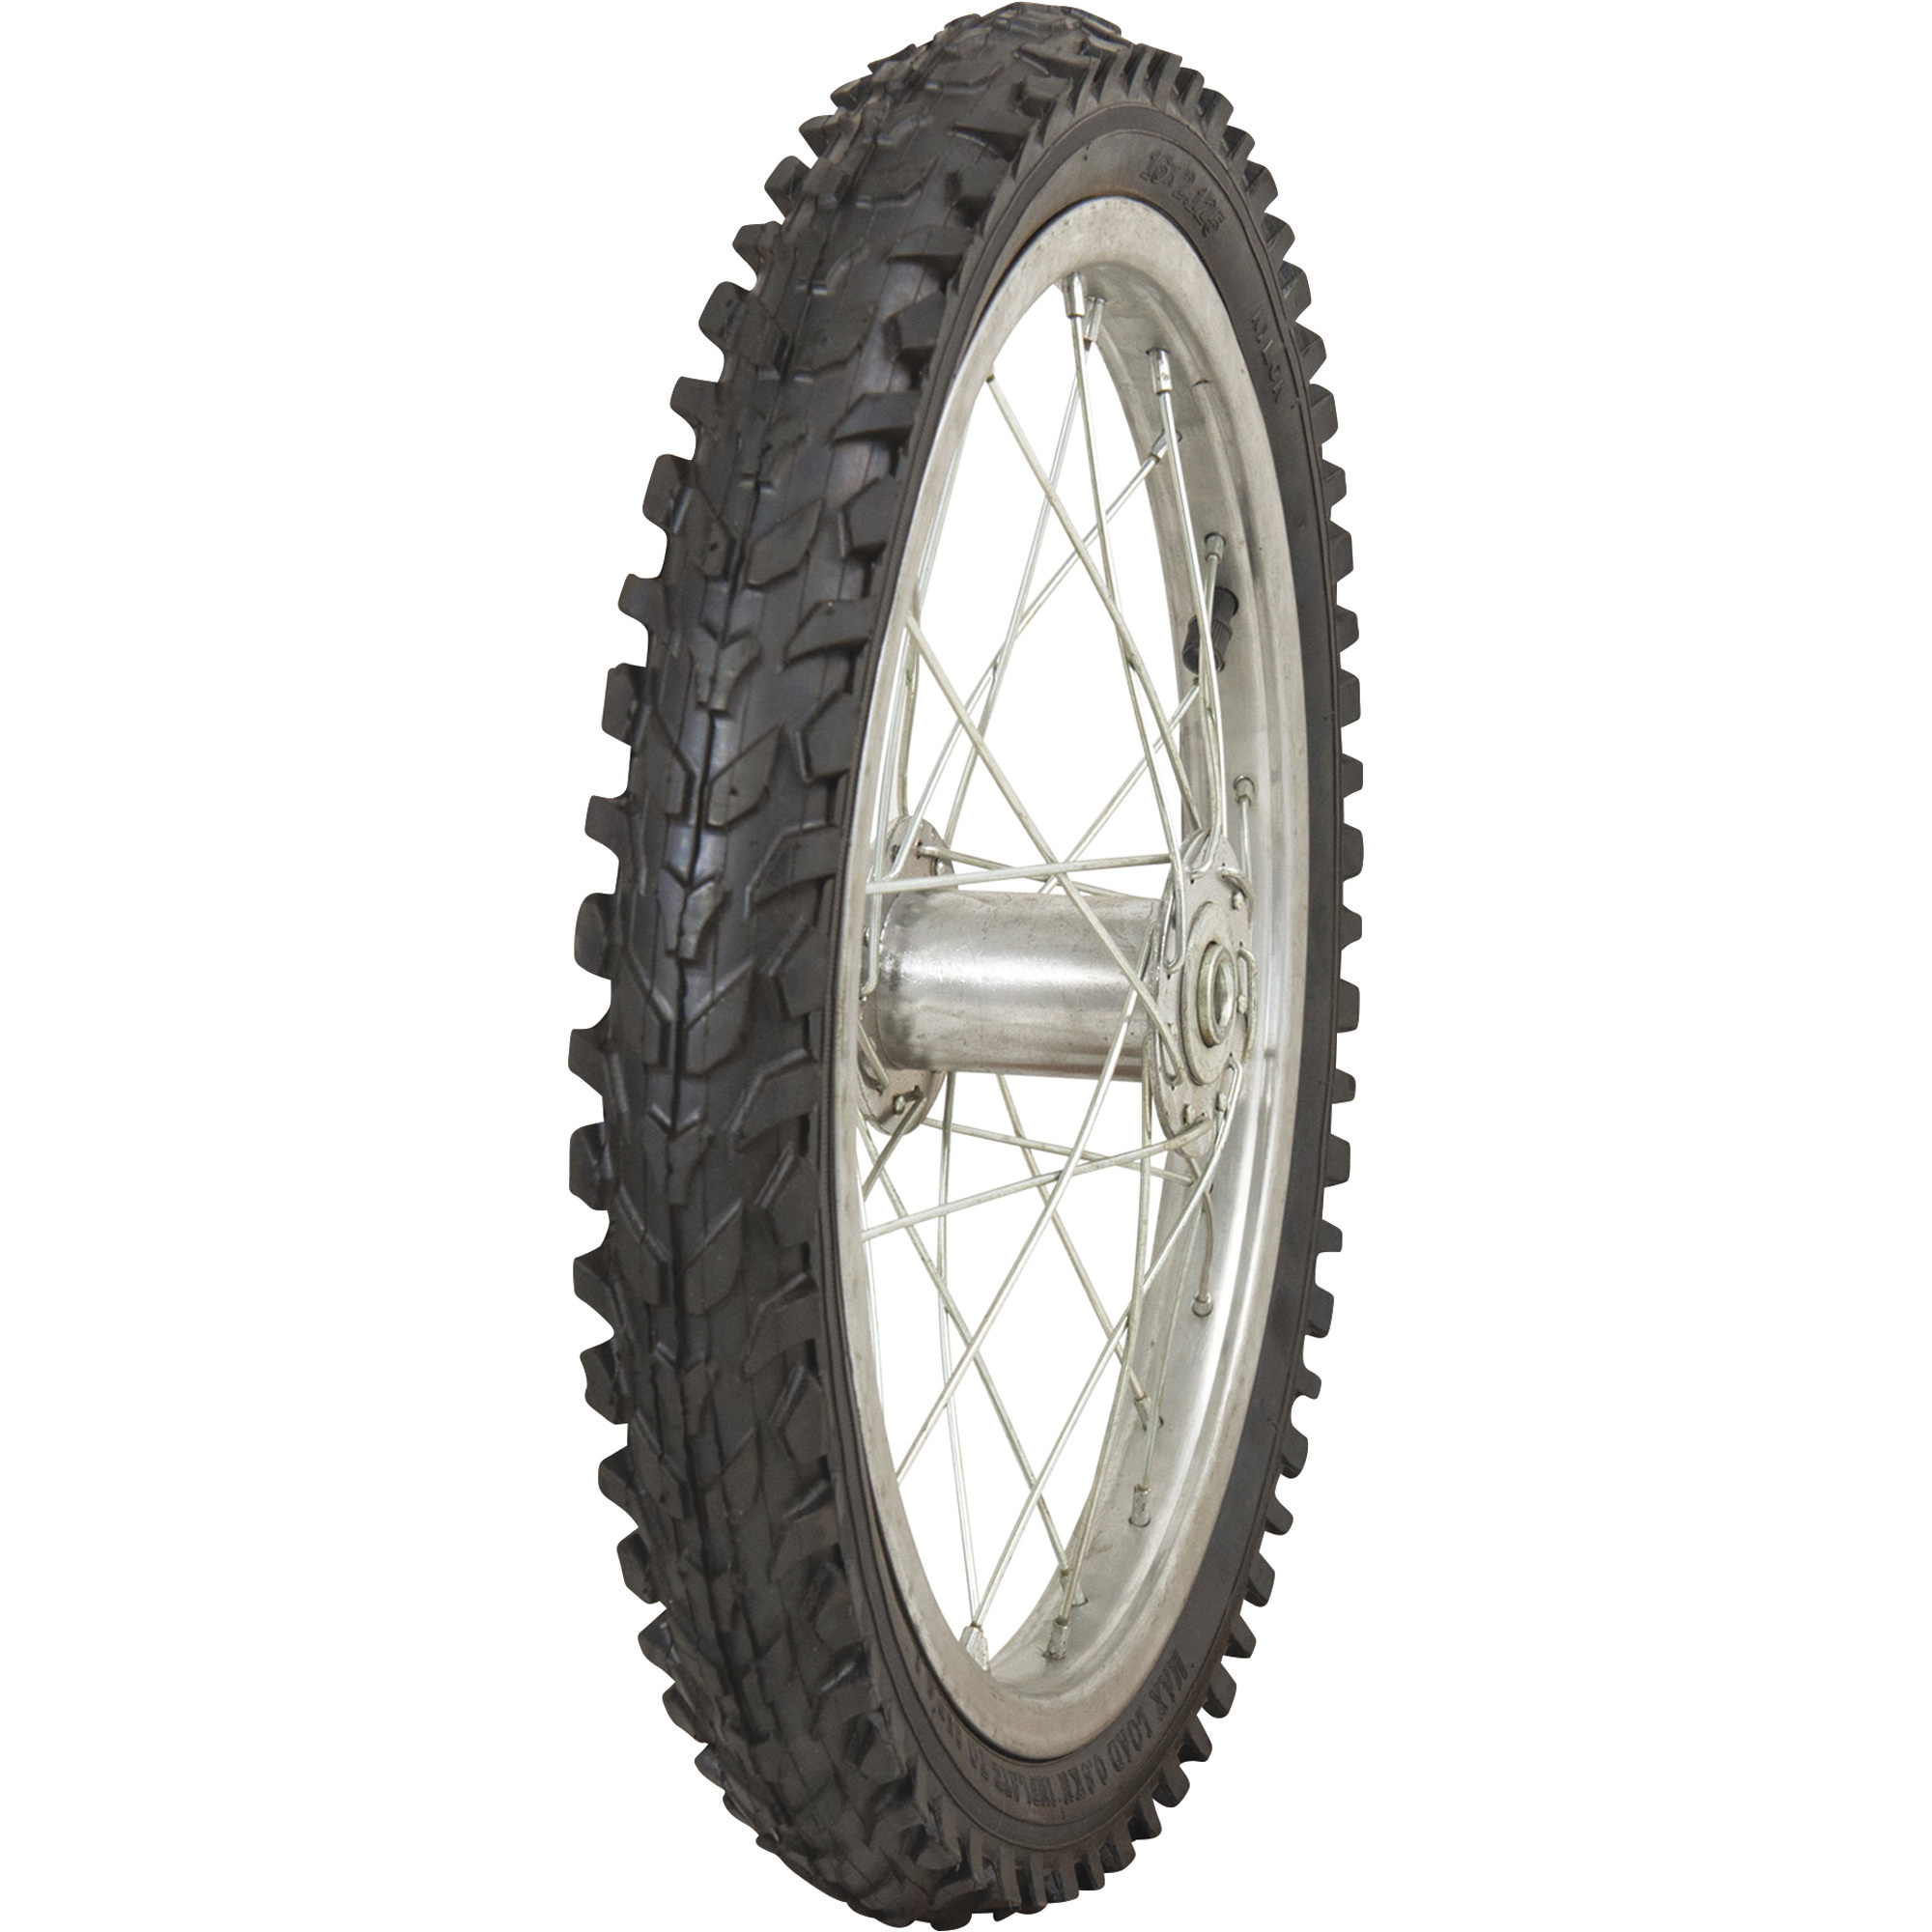 Marathon Tires Pneumatic Tire On Steel Spoked Wheel â 1/2Inch Bore, 16 x 1.75